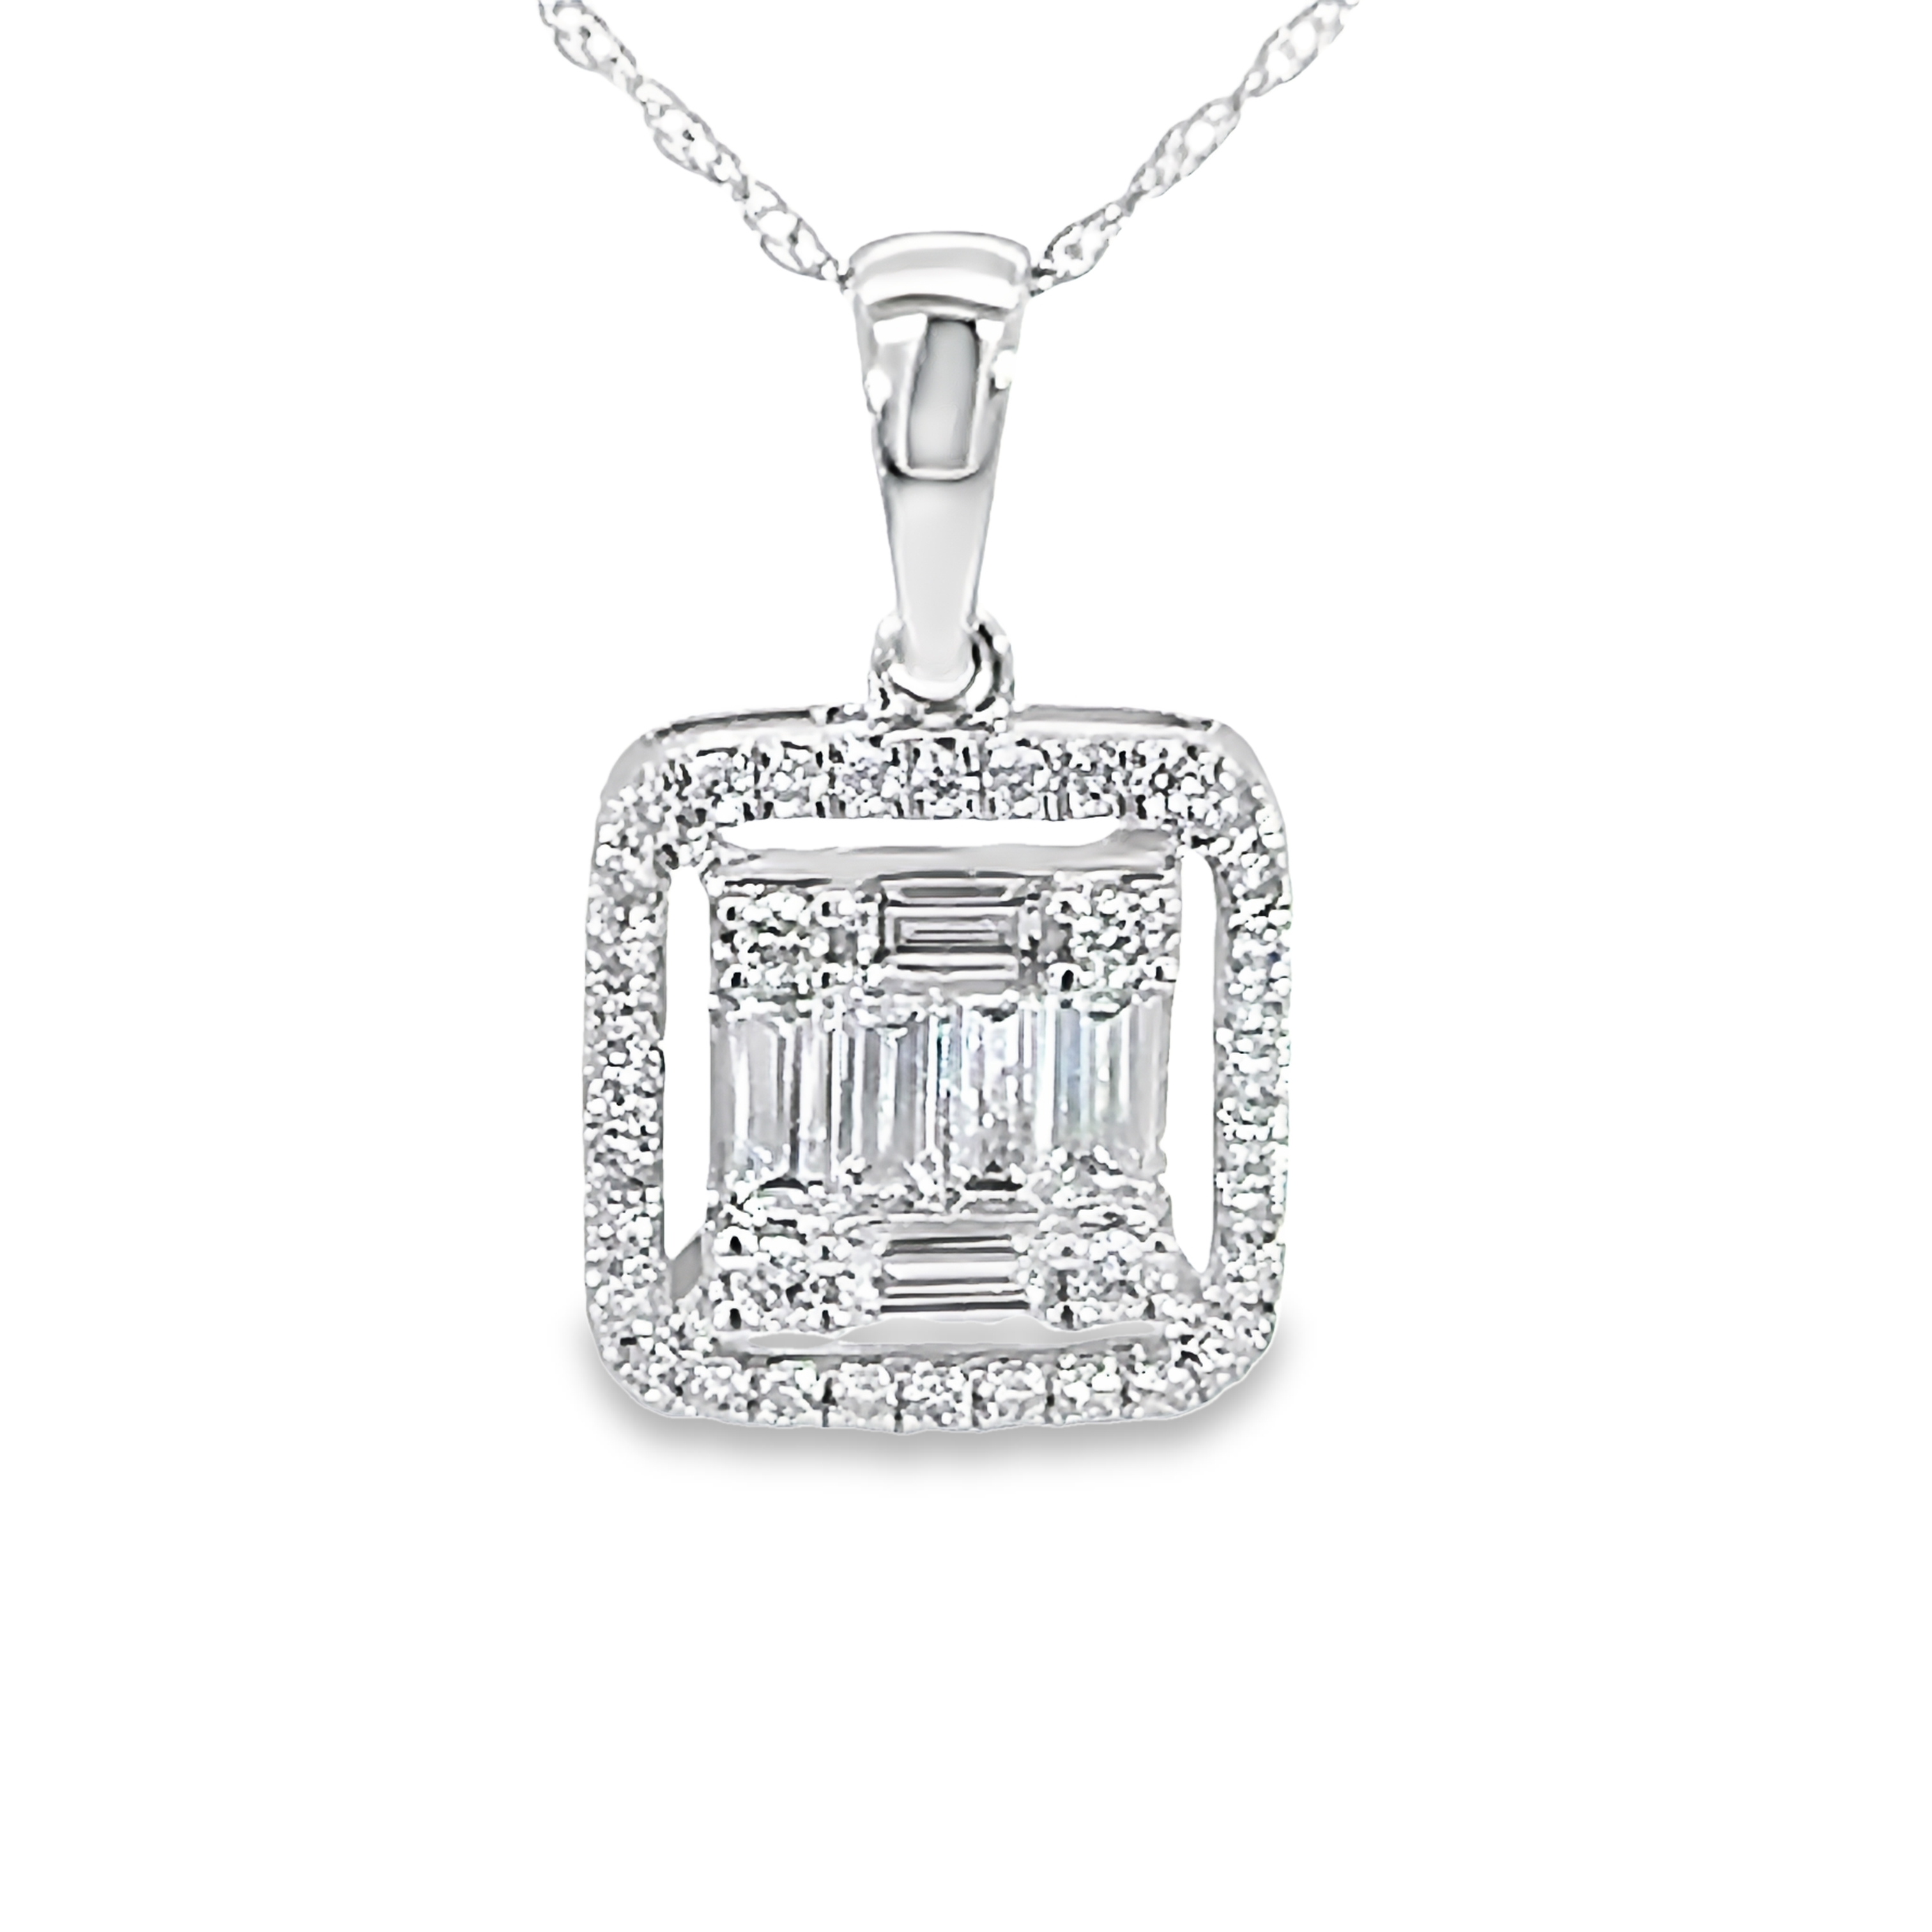 14k Gold Diamond Pendant Necklace